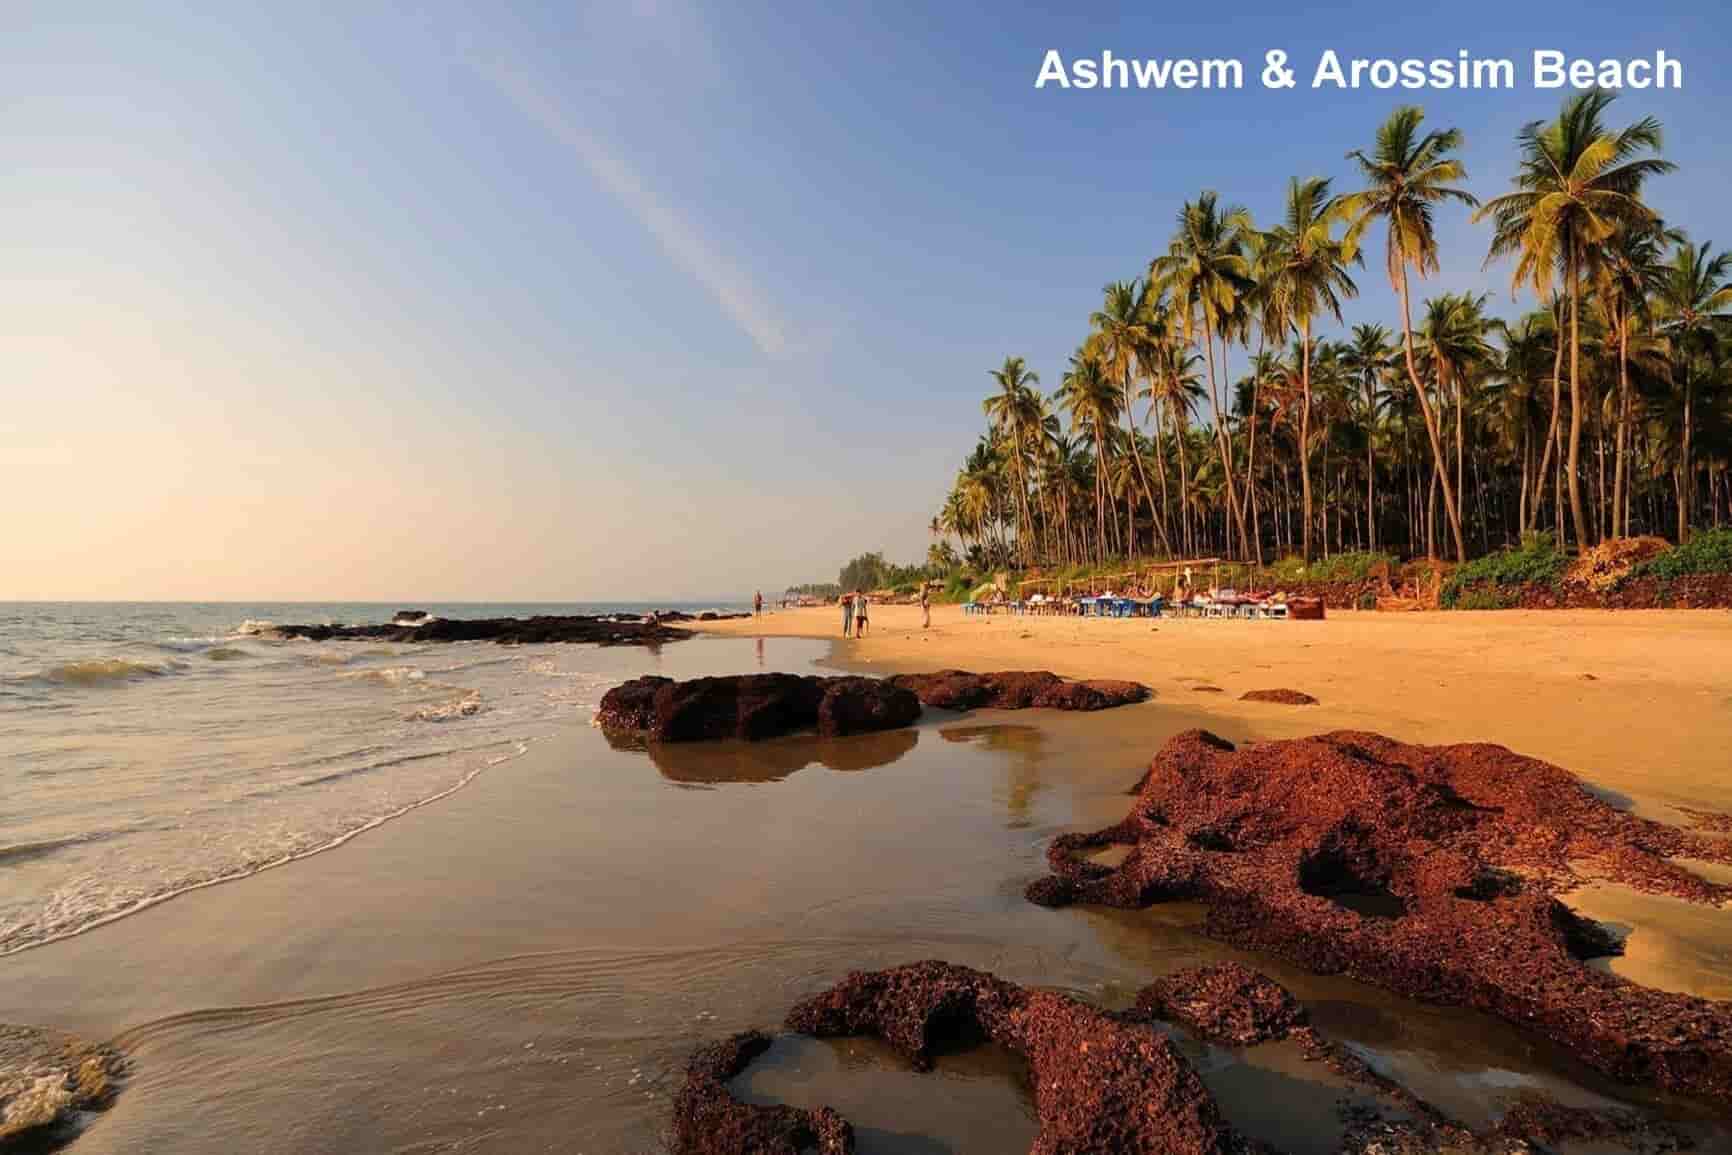 Ashwem & Arossim Beach